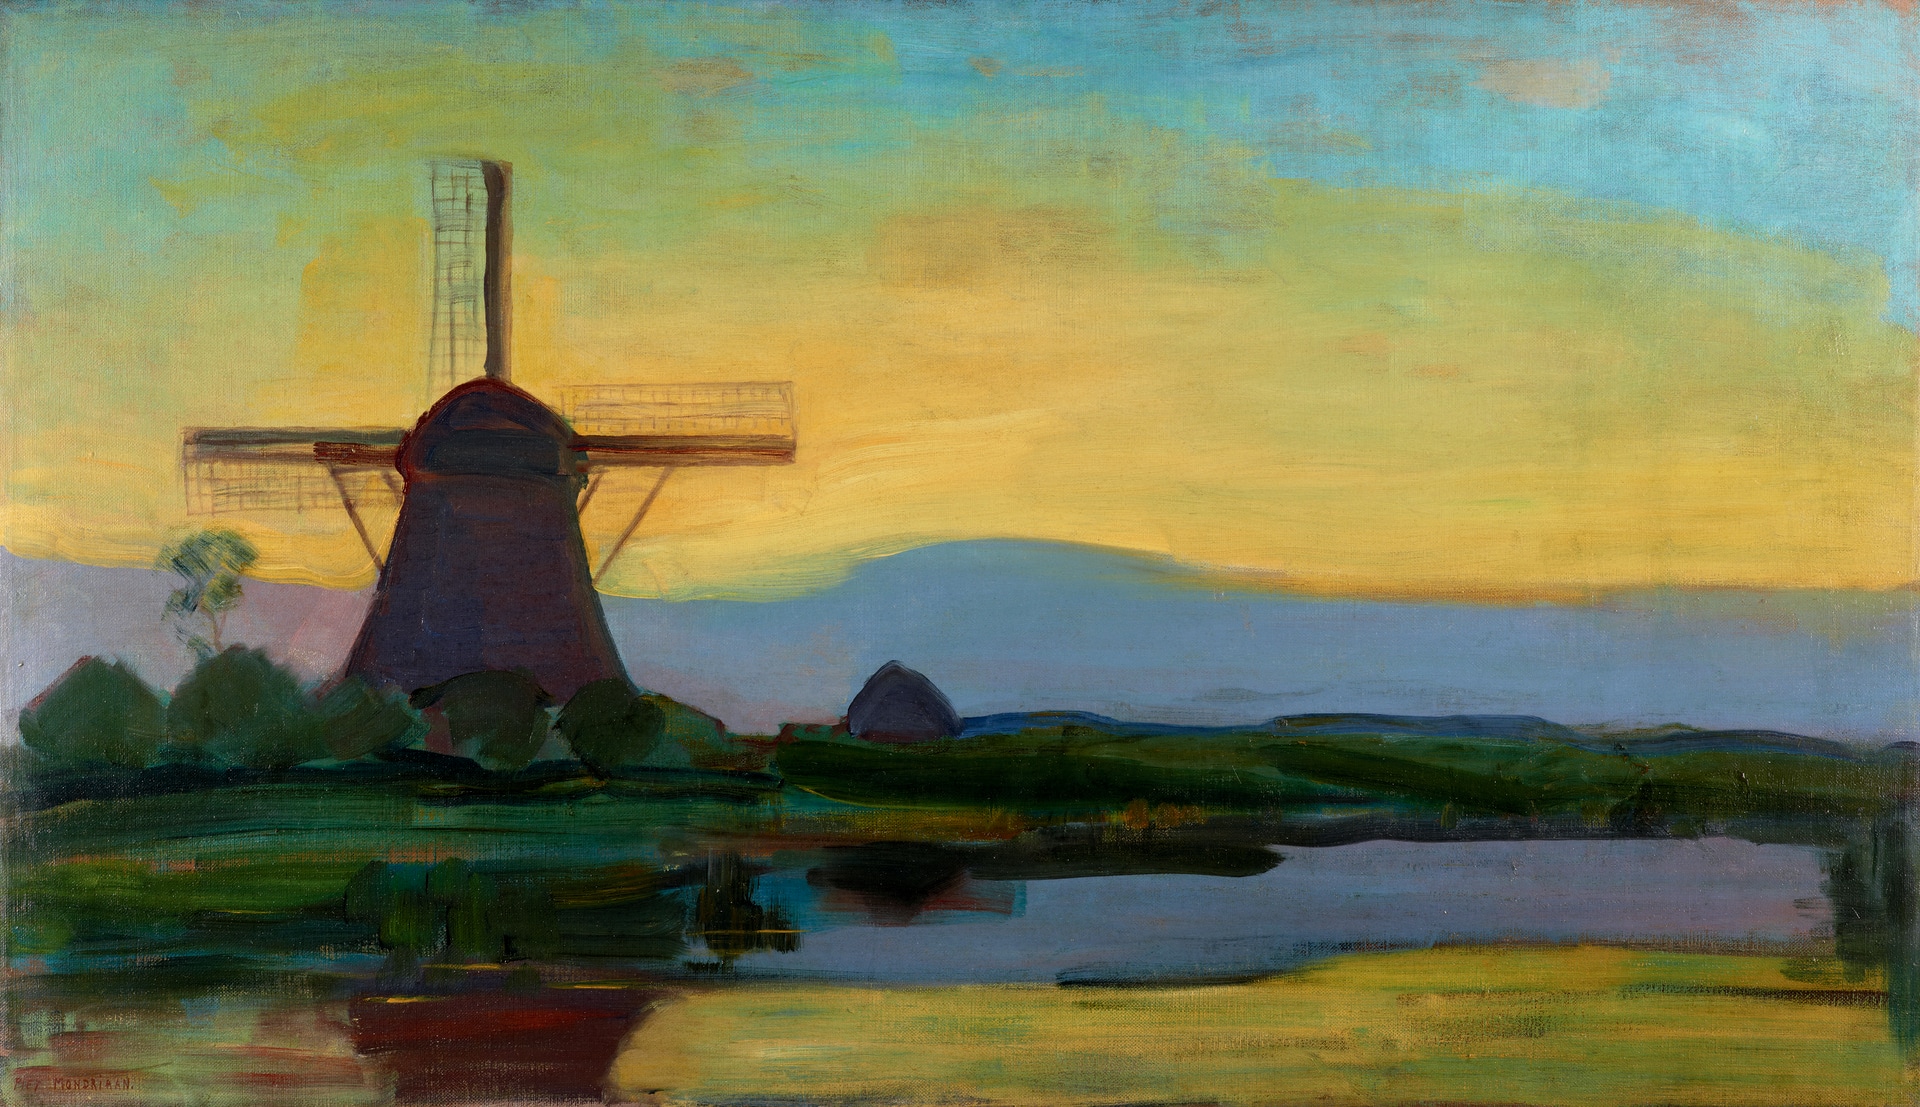 Piet Mondrian (1872-1944): Mulino Oostzijdse con cielo blu, giallo e viola, c. 1907-1908. Olio su tela. Kunstmuseum Den Haag